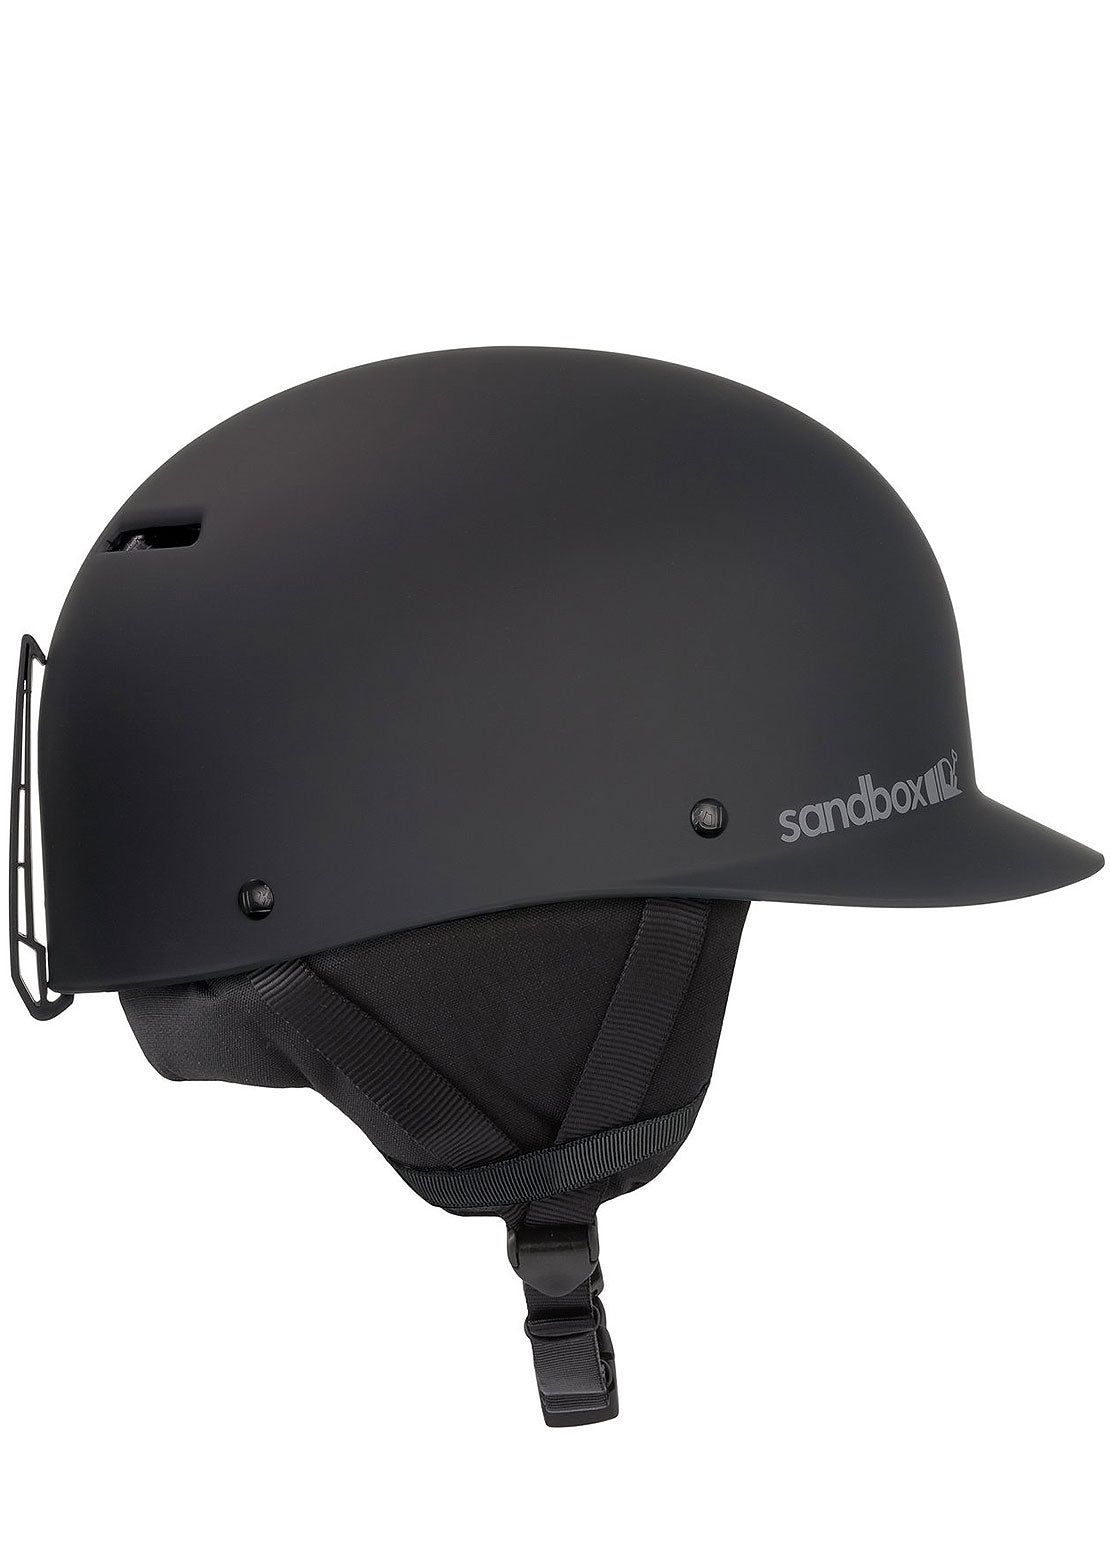 Sandbox Junior Classic 2.0 Ace Winter Helmet Black